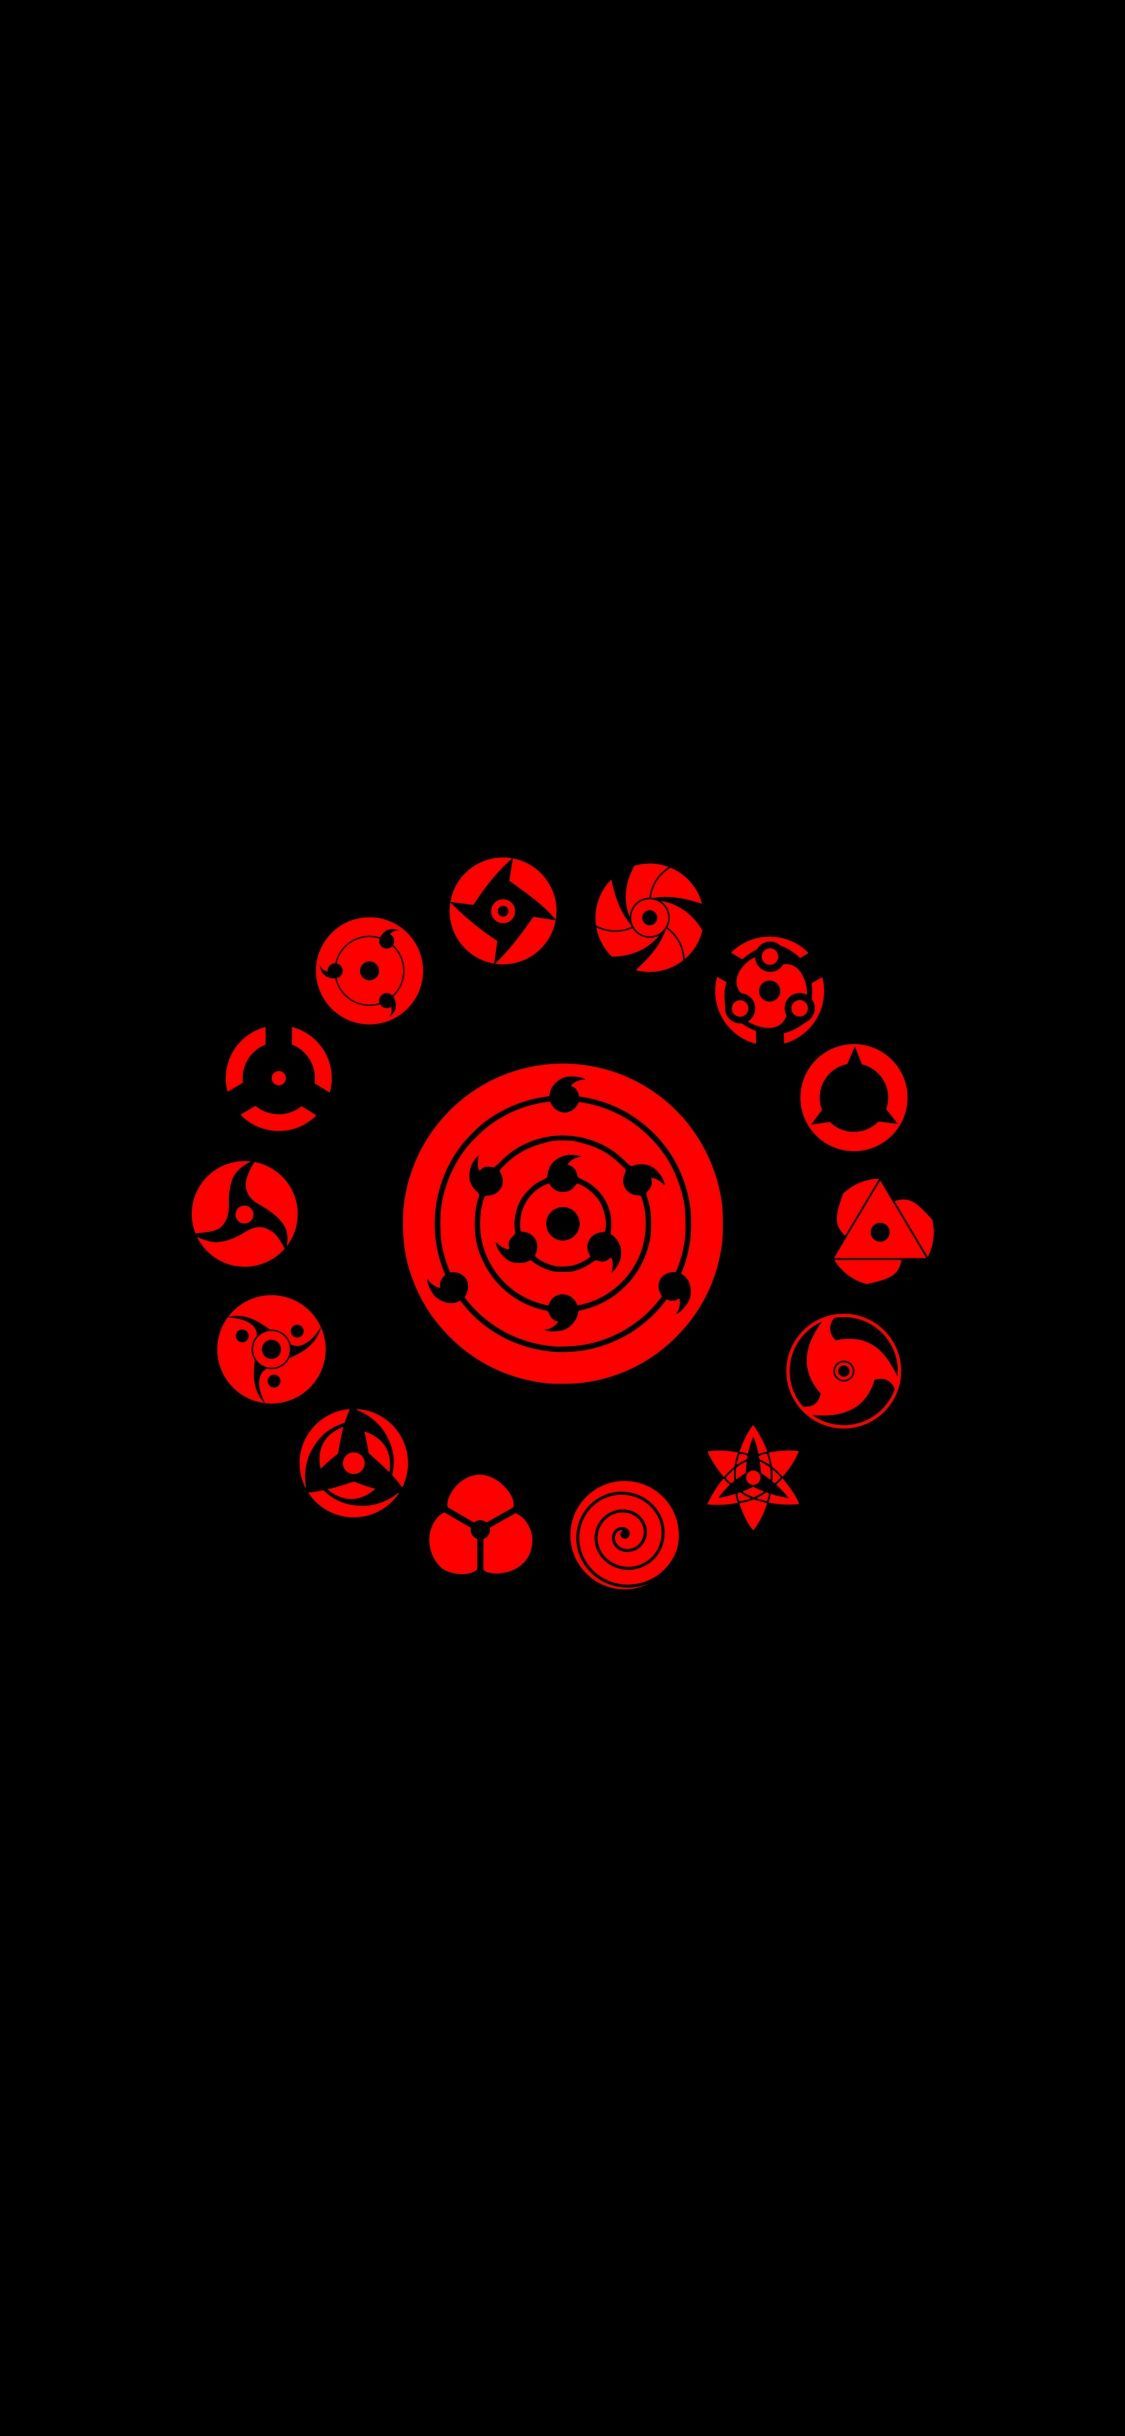 Gaara Symbol wallpaper by DraxicDraco - Download on ZEDGE™